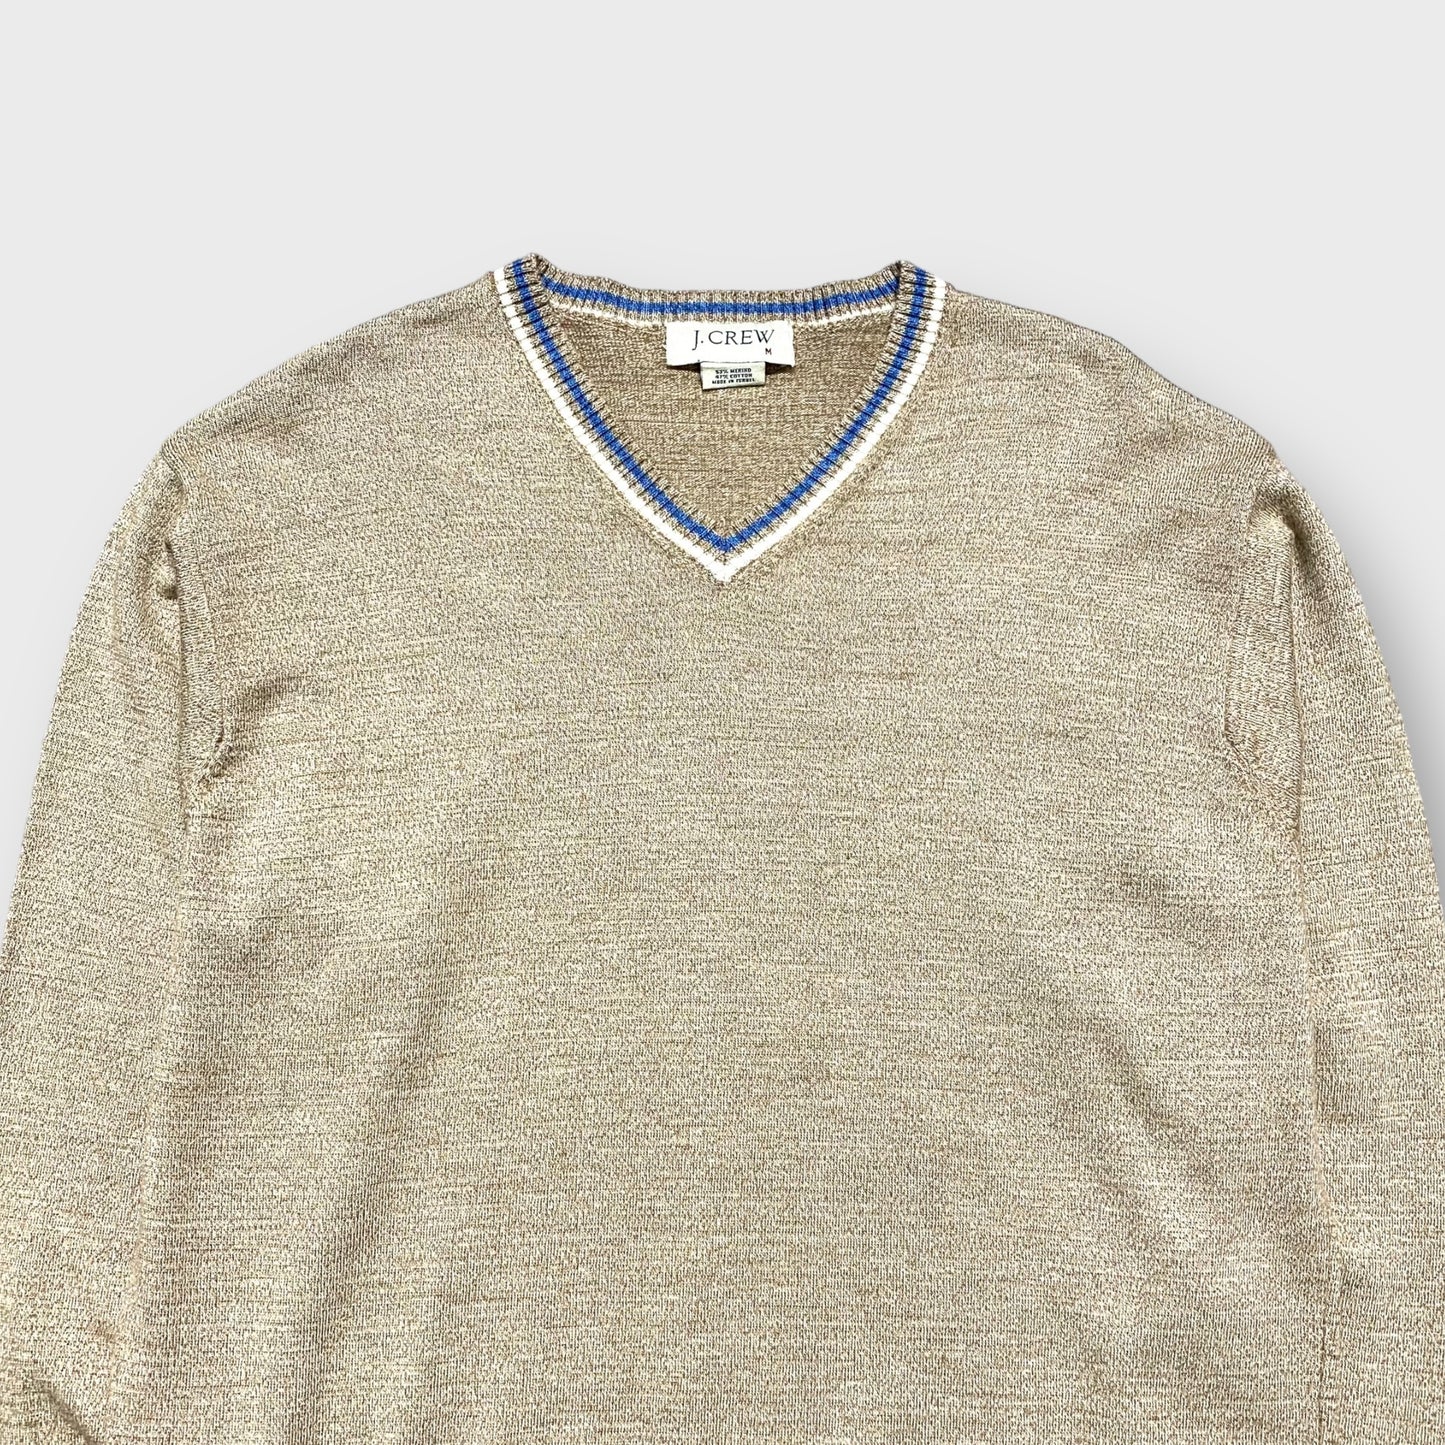 00's "J.CREW" Brown color v-neck knit sweater